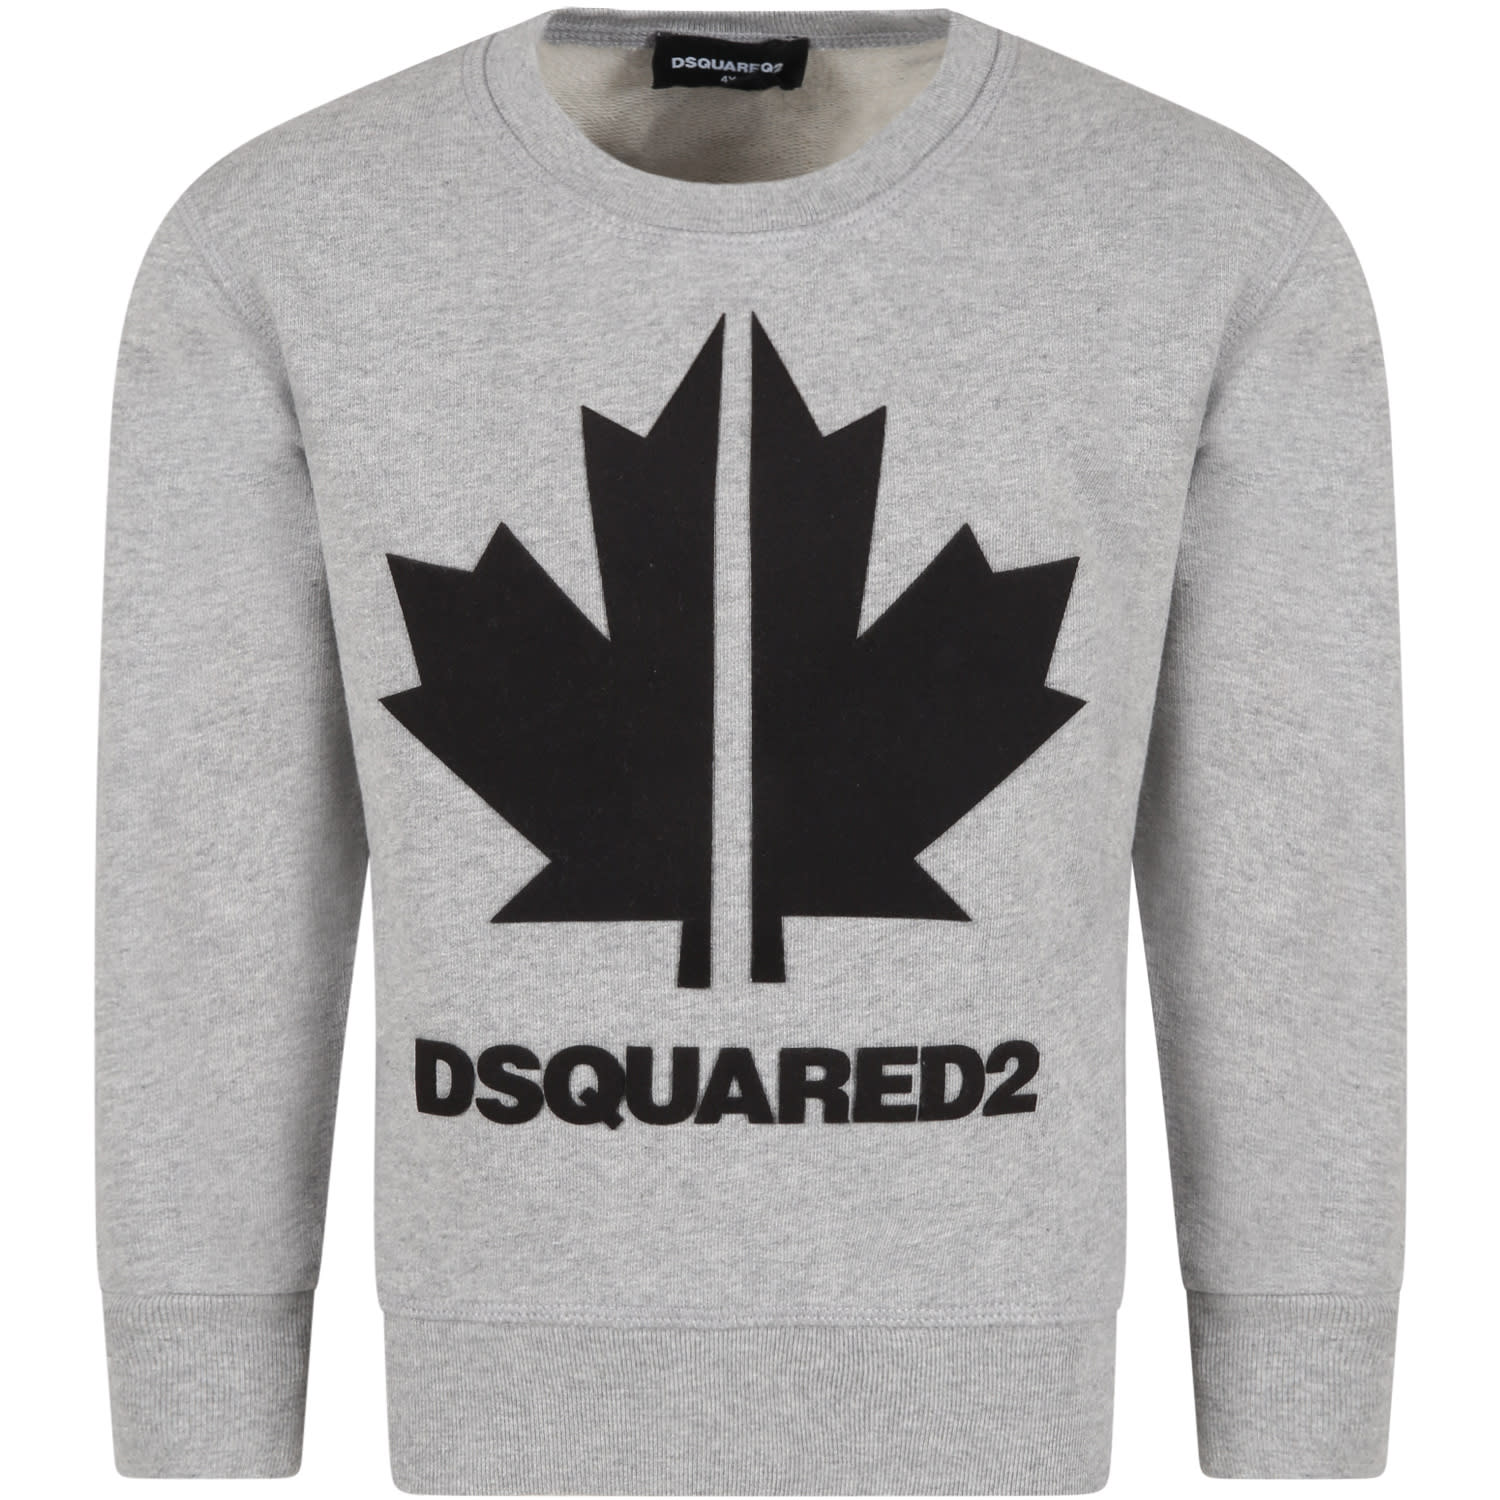 Dsquared2 Grey Sweatshirt For Boy With Maple Leaf